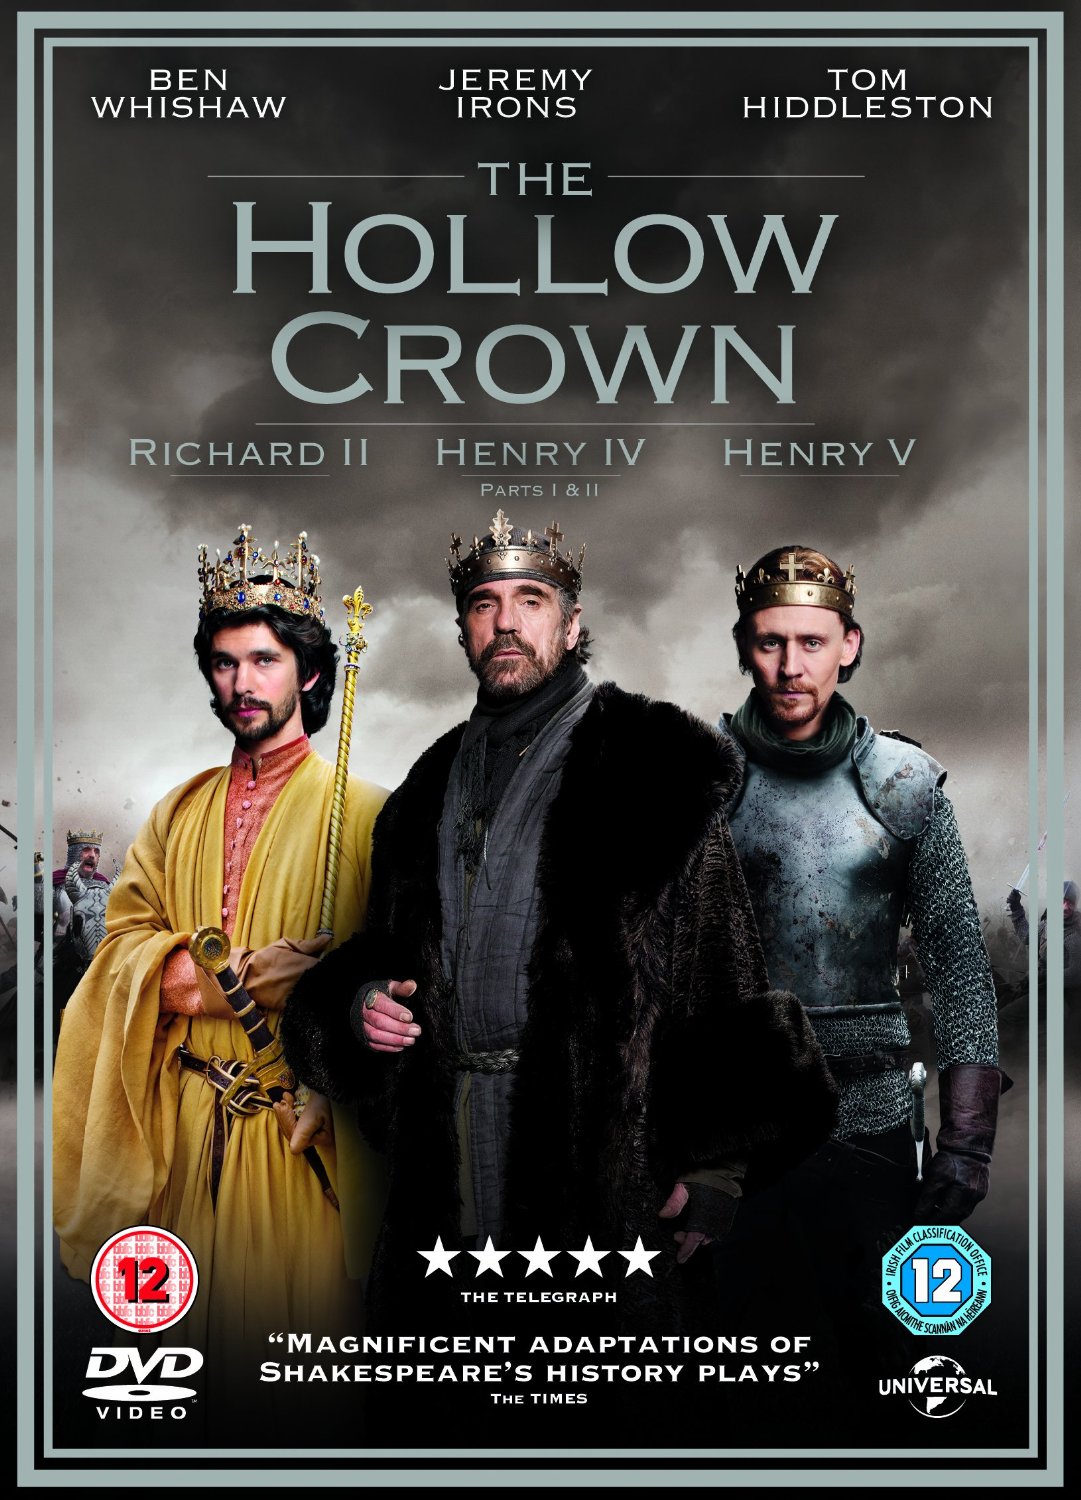 The Hollow Crown - TV Mini Series [DVD]